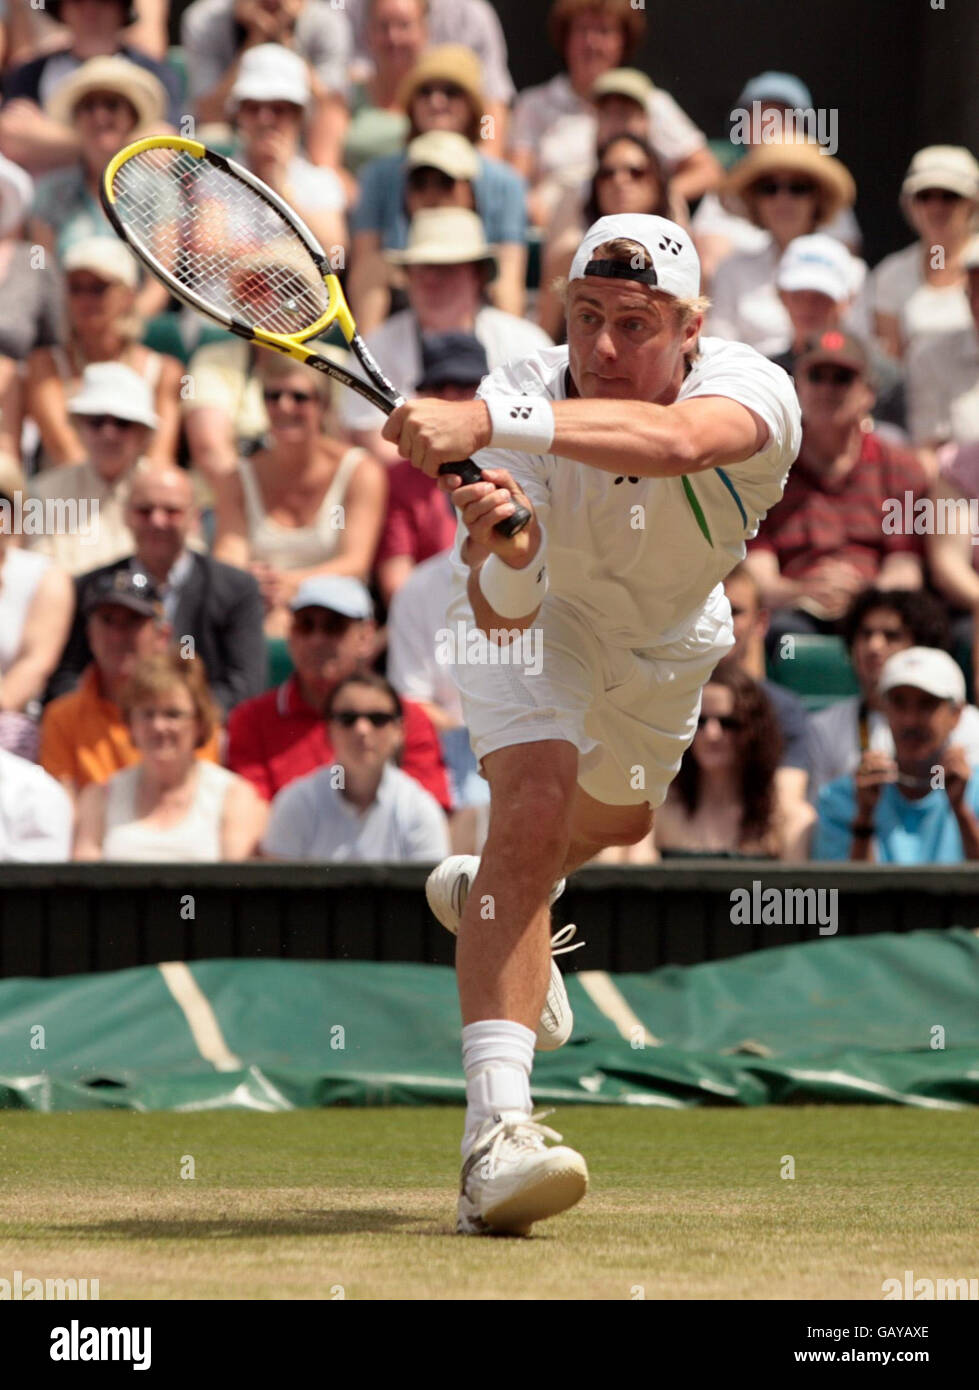 Australia S Lleyton Hewitt In Action Against Switzerland S Roger Federer During The Wimbledon